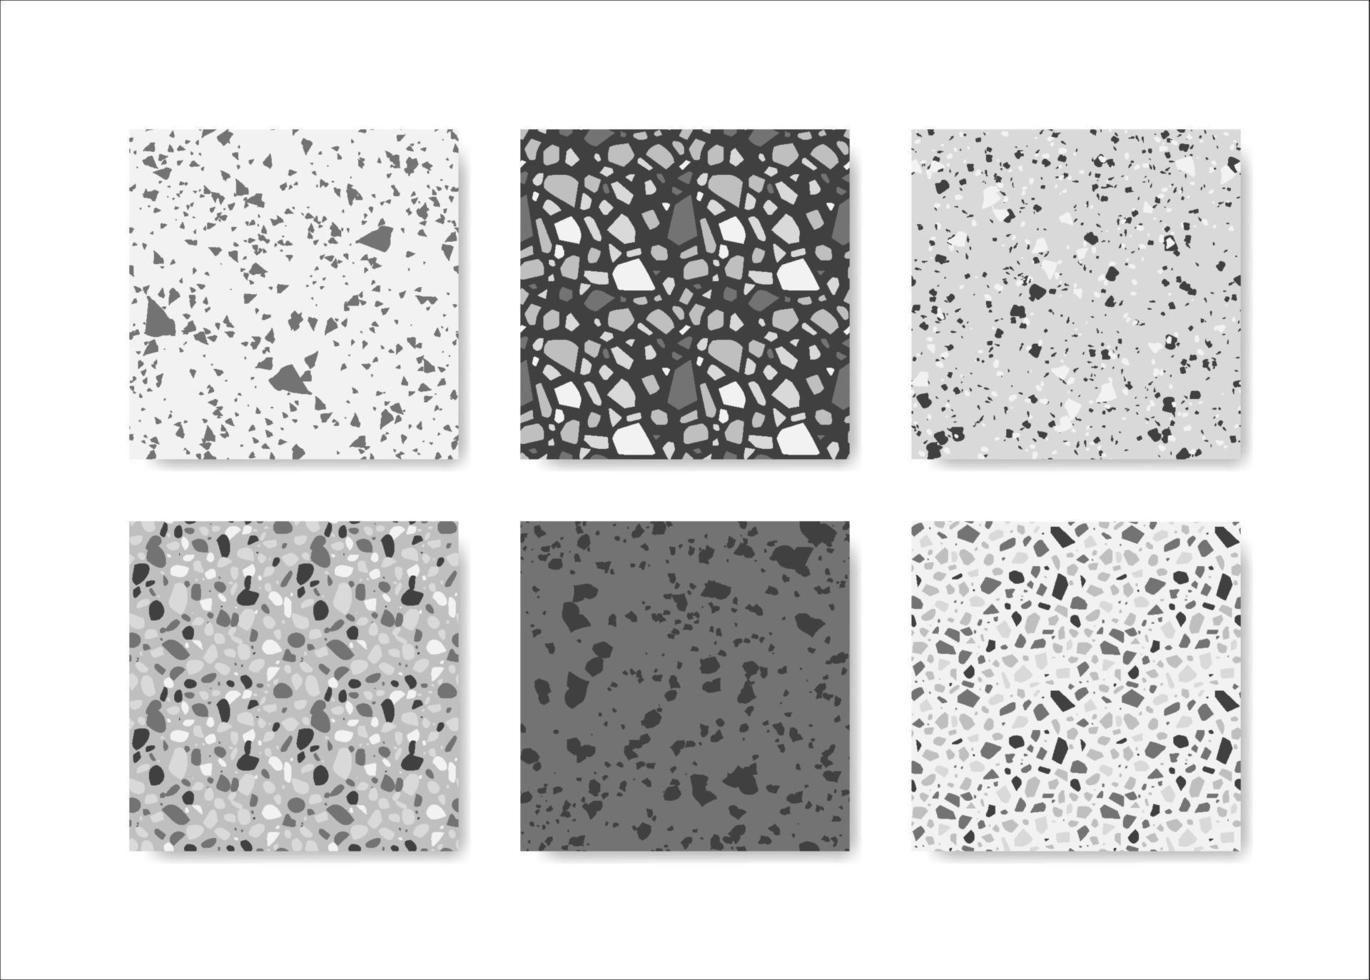 Set of terrazzo seamless patterns. Terrazzo floor pattern. Terrazzo seamless pattern. Collection of terrazzo pattern vector